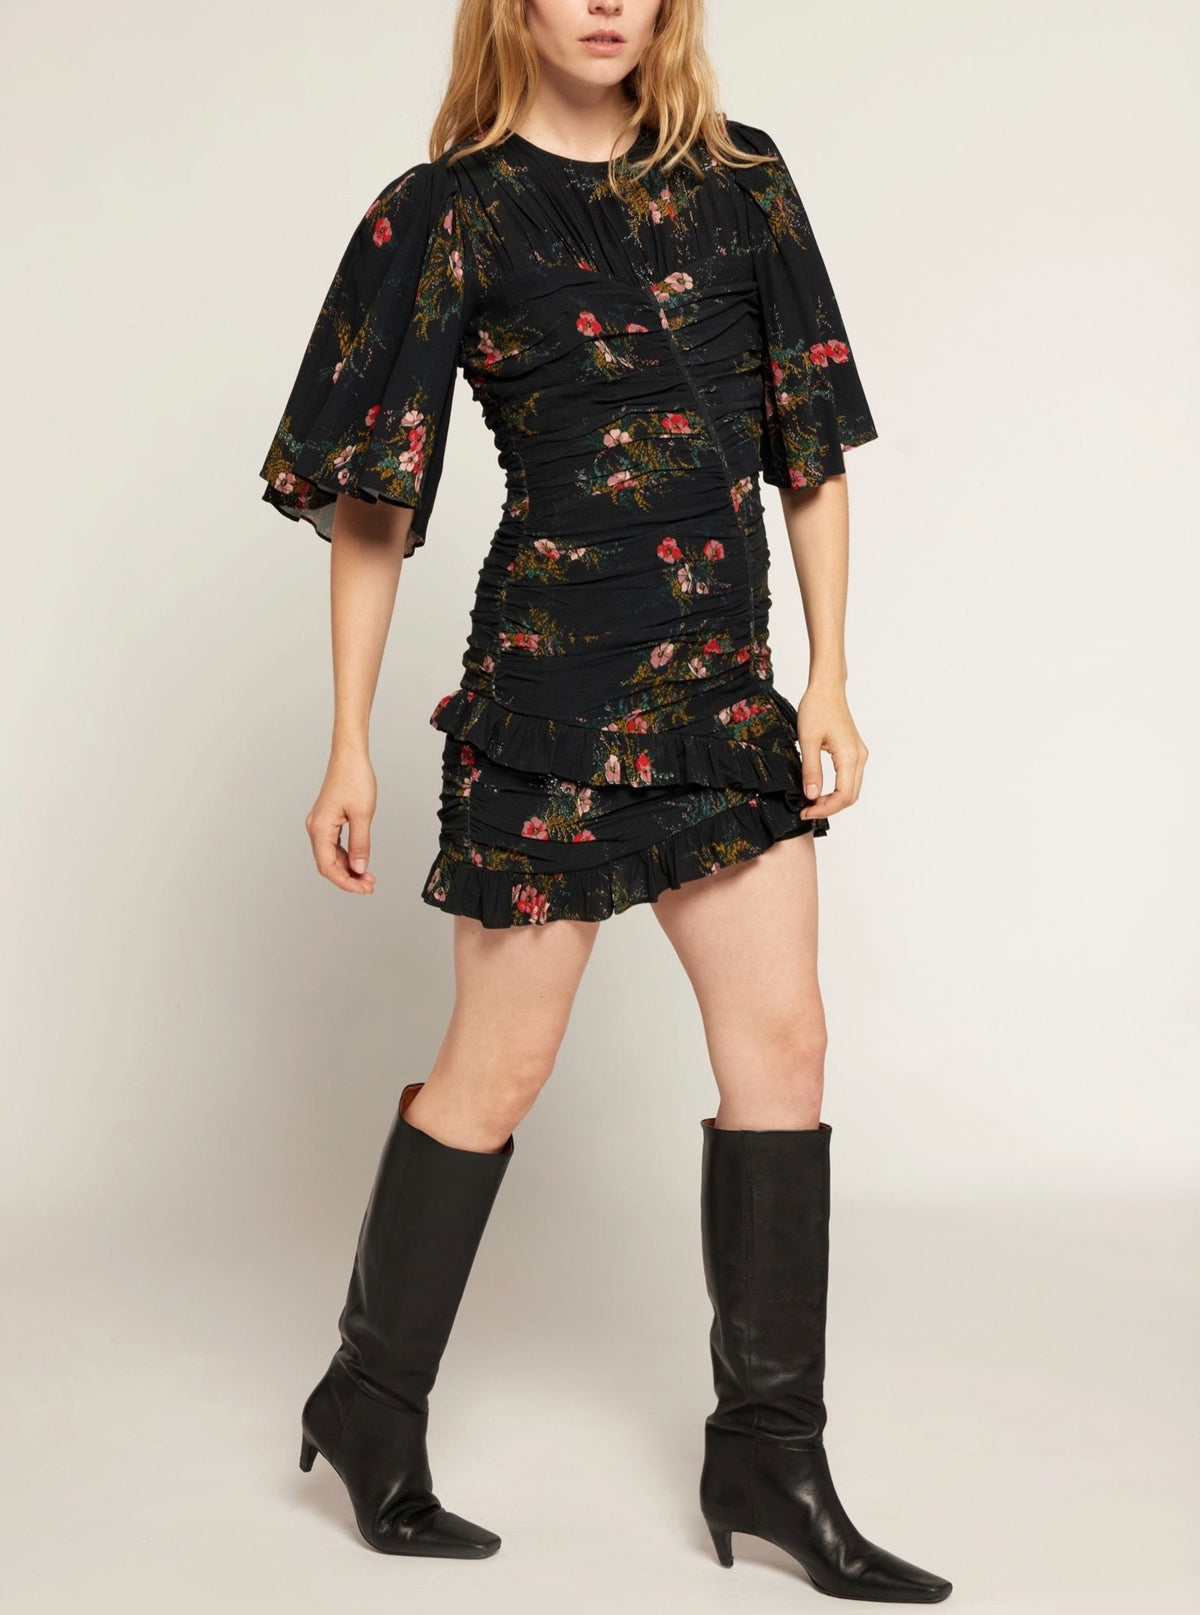 Joie Foster Flounce Sleeve Mini Dress - Size 4 Available